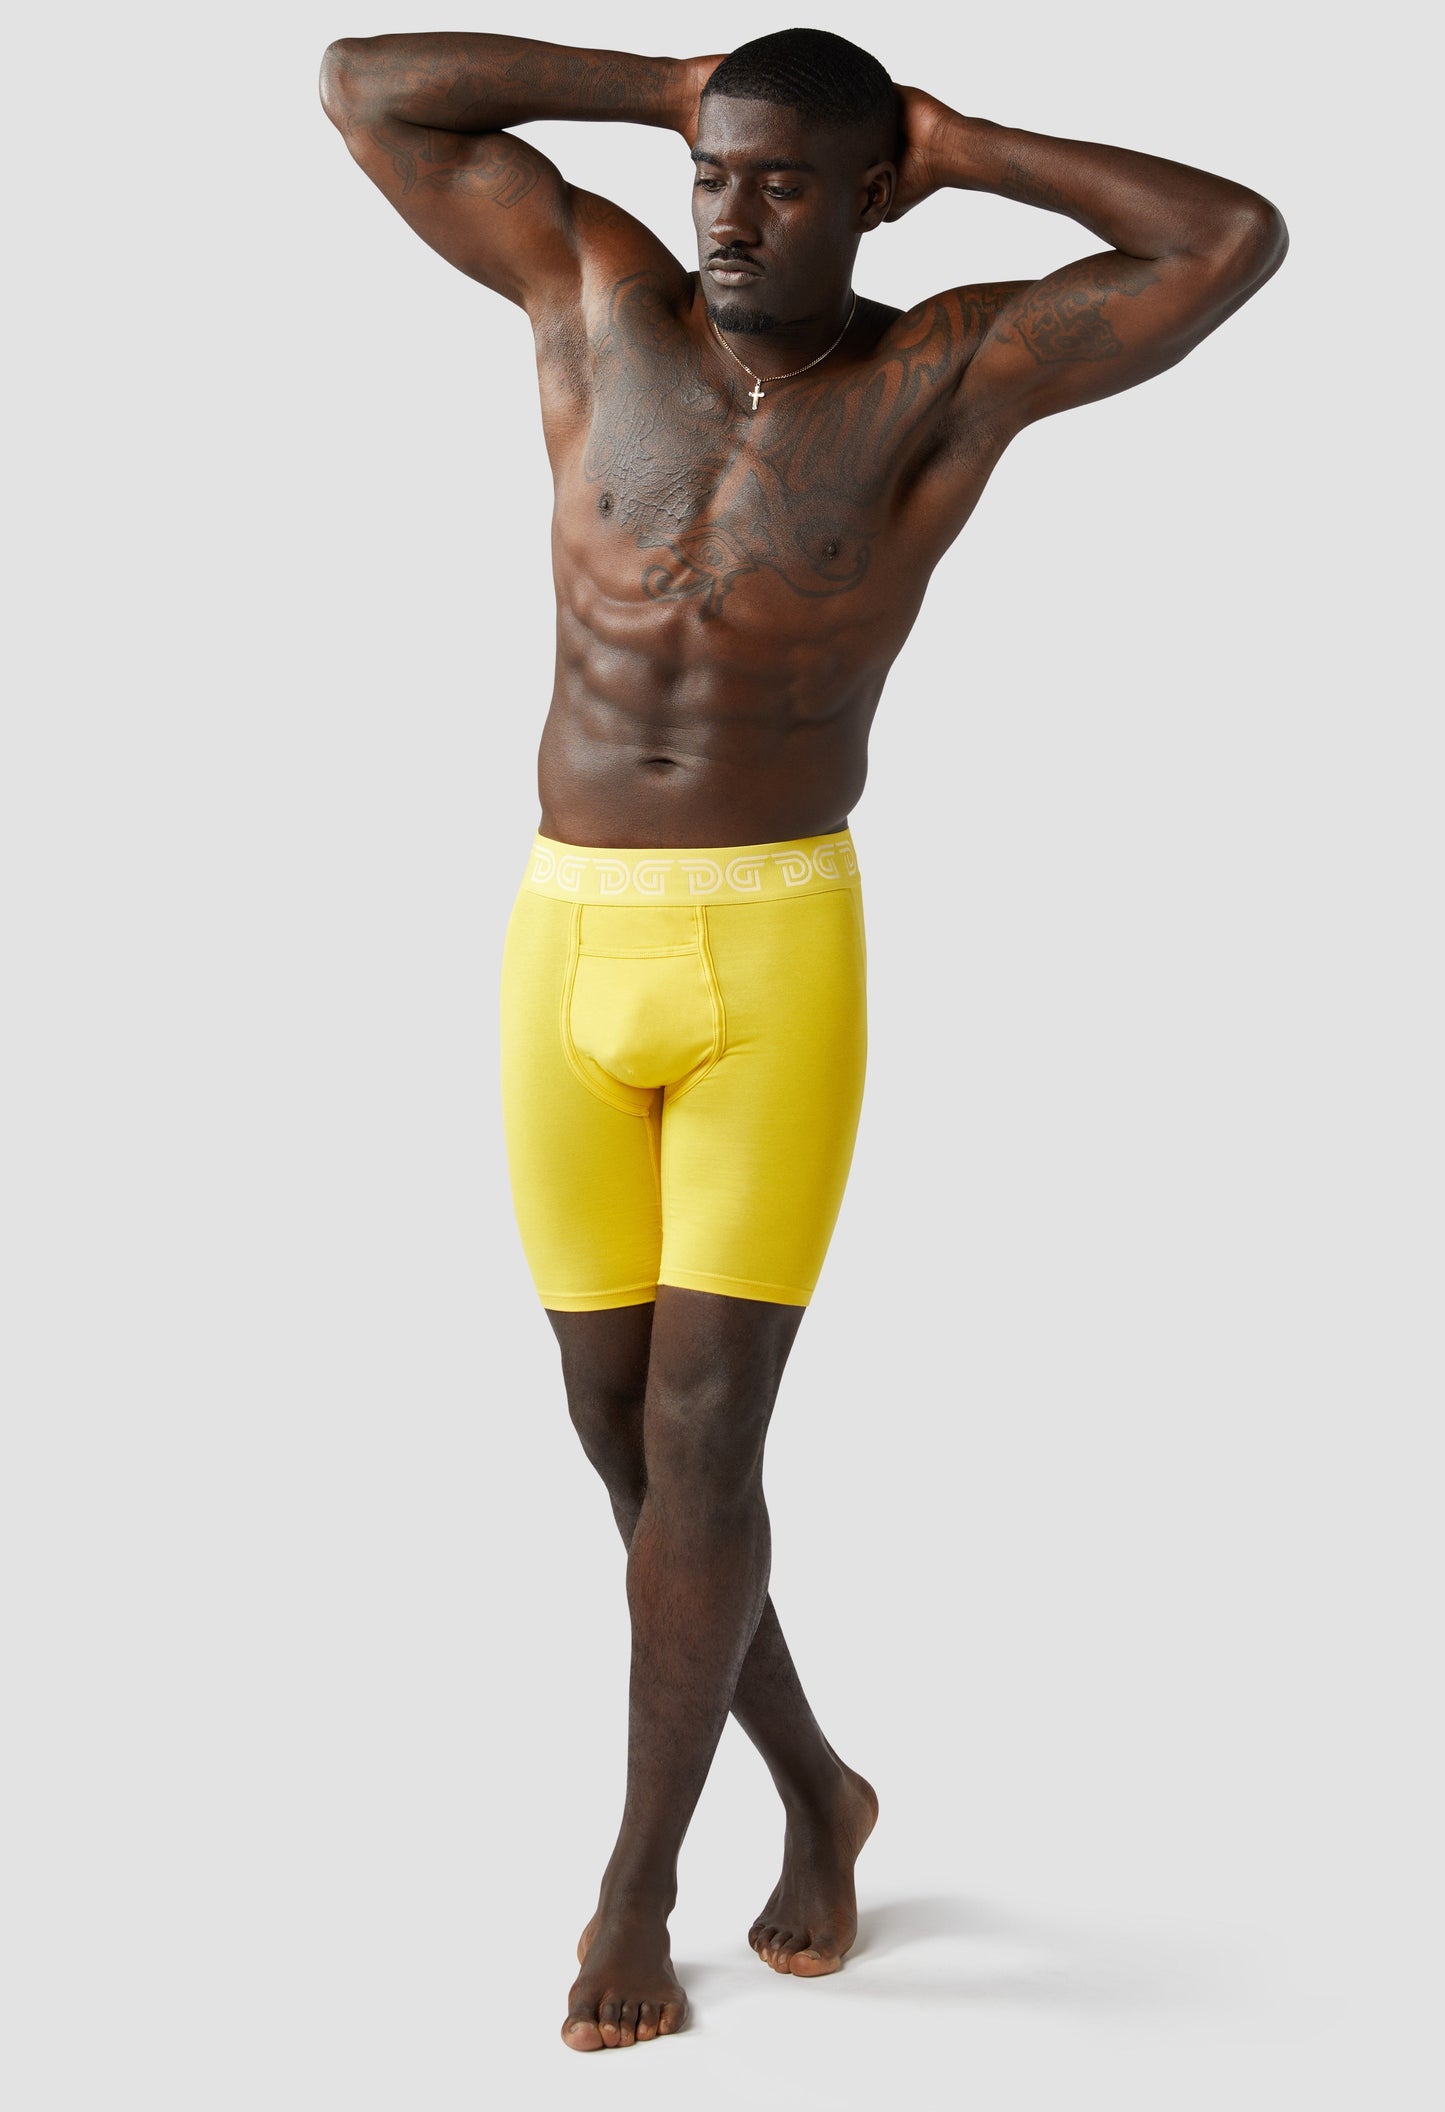 Drawlz Brand Co. , LLC Cottonz Yellow Yellow Cotton Men's Underwear 